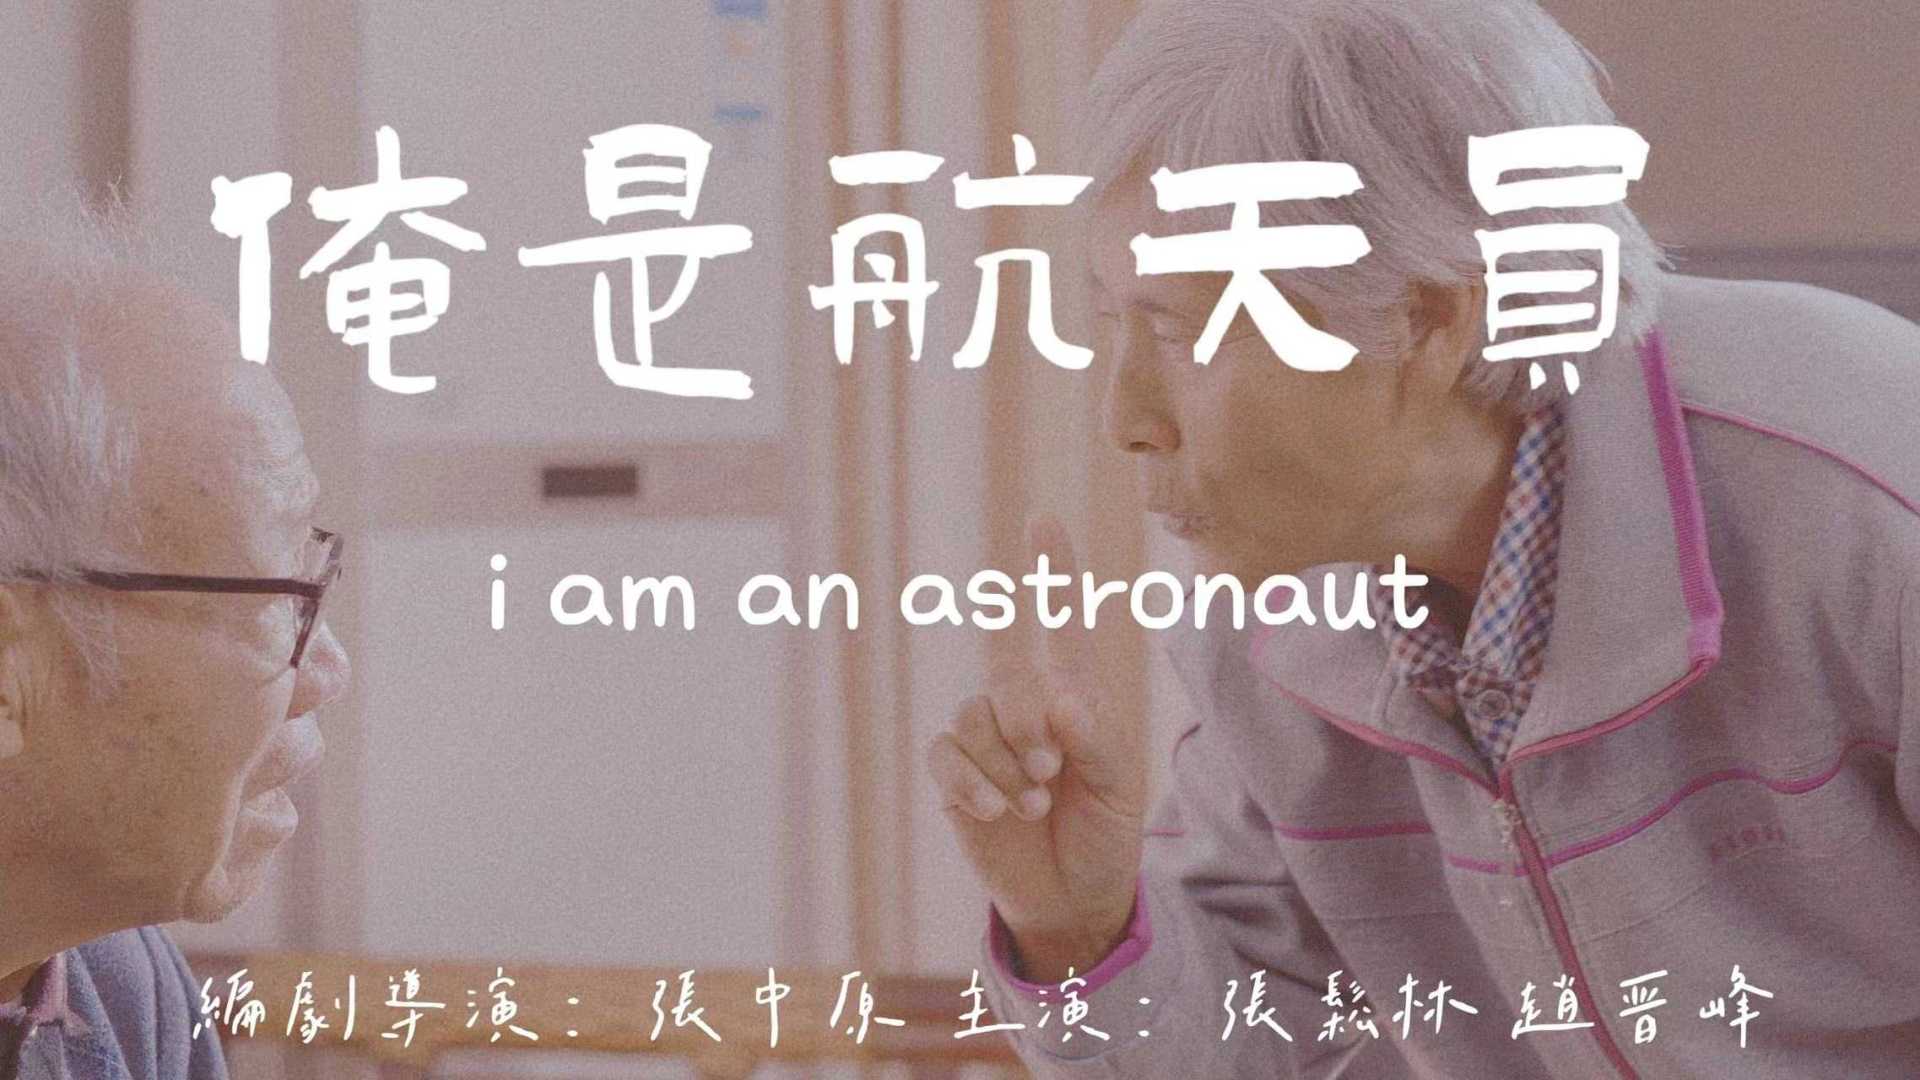 i am an astronaut